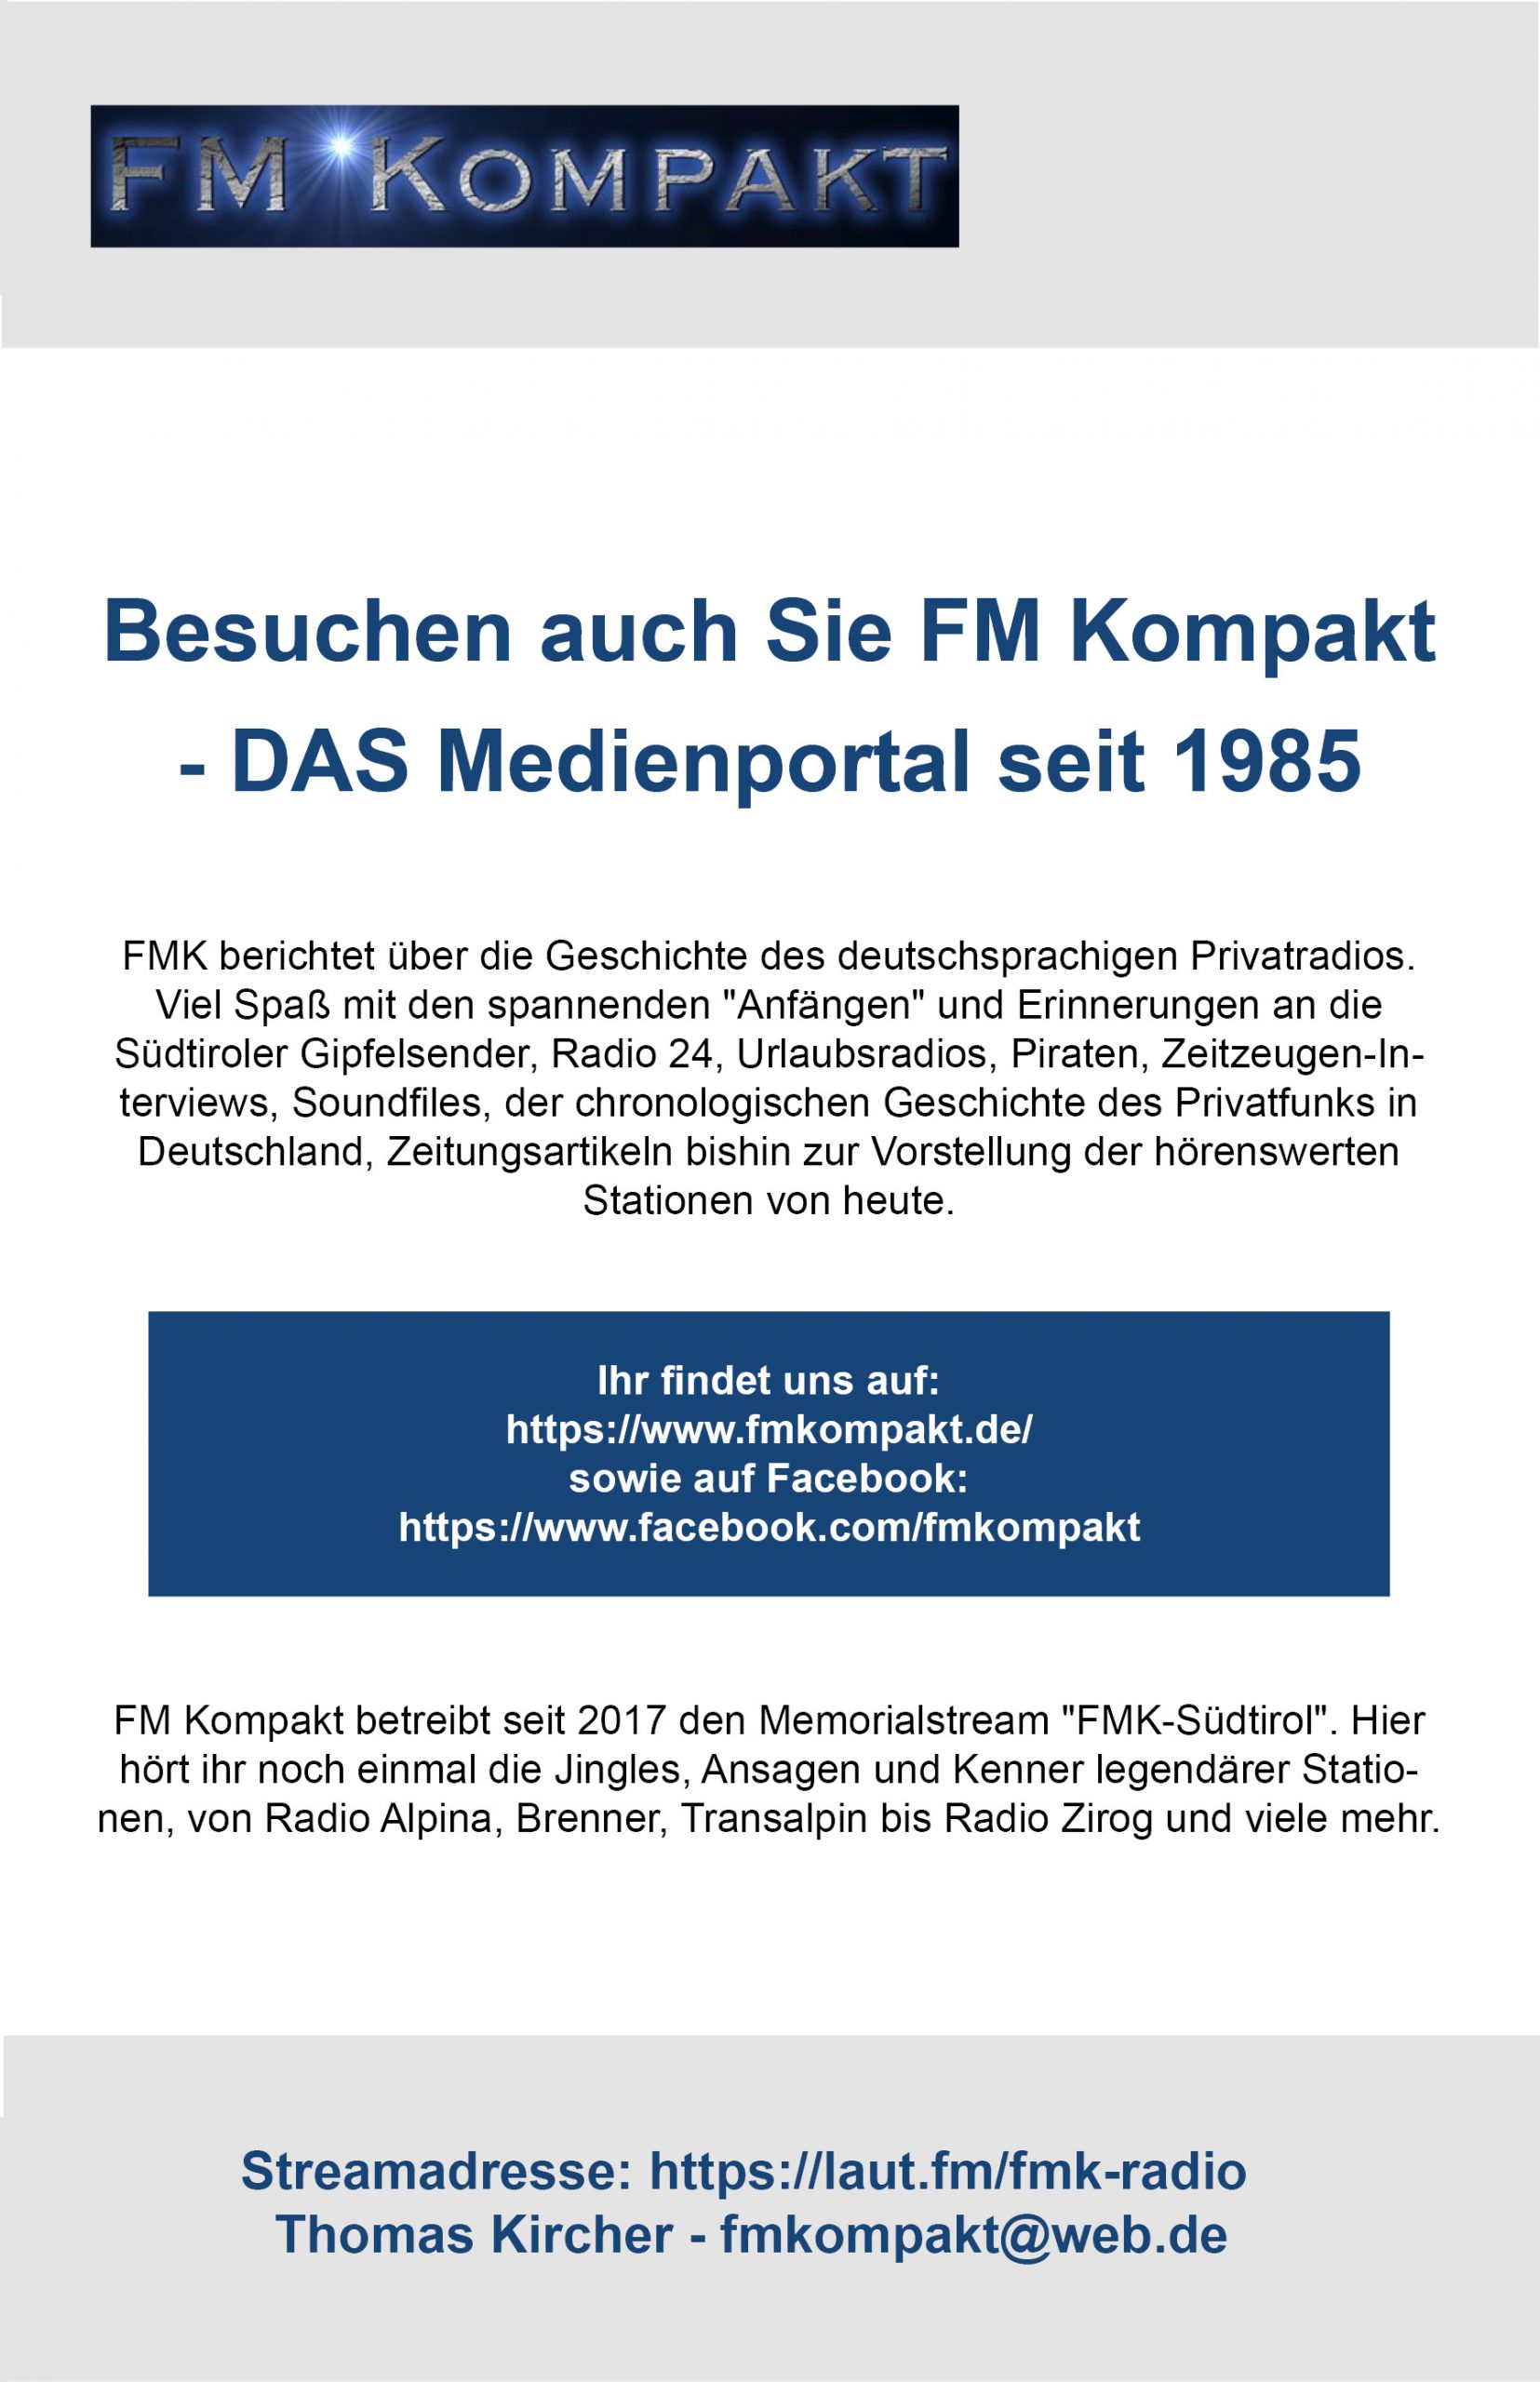 Advertisement from FM Kompakt, a media portal